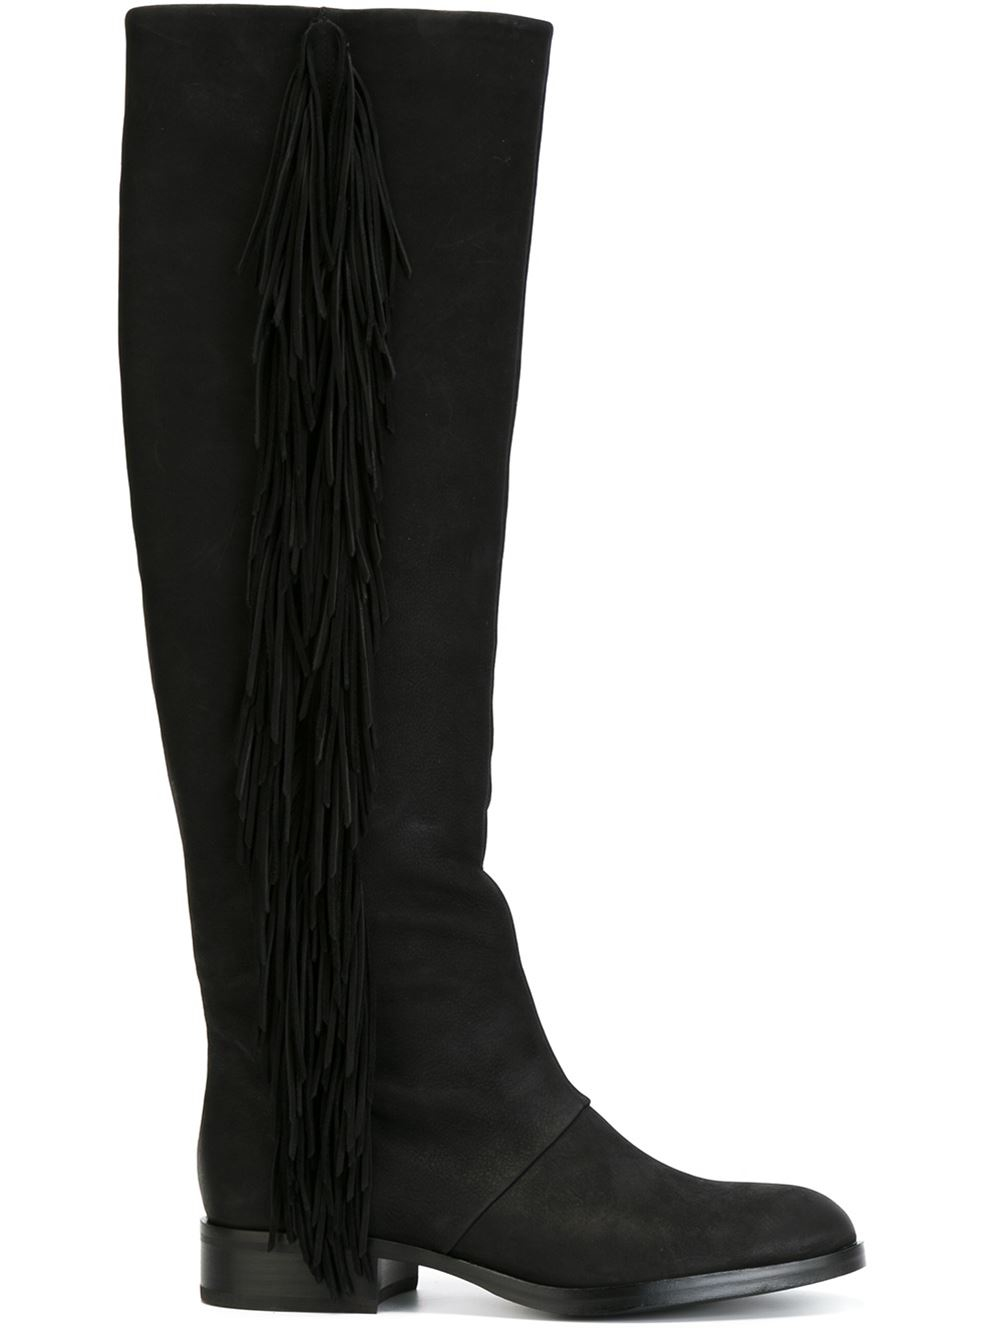 Sam edelman Josephine Leather Knee-High Boots in Black | Lyst